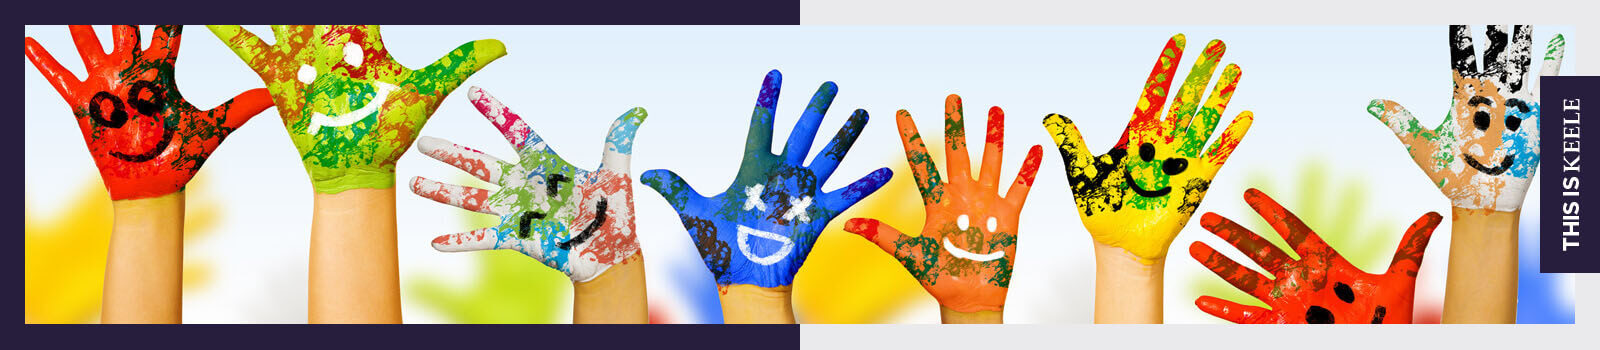 Row of children's painted hands